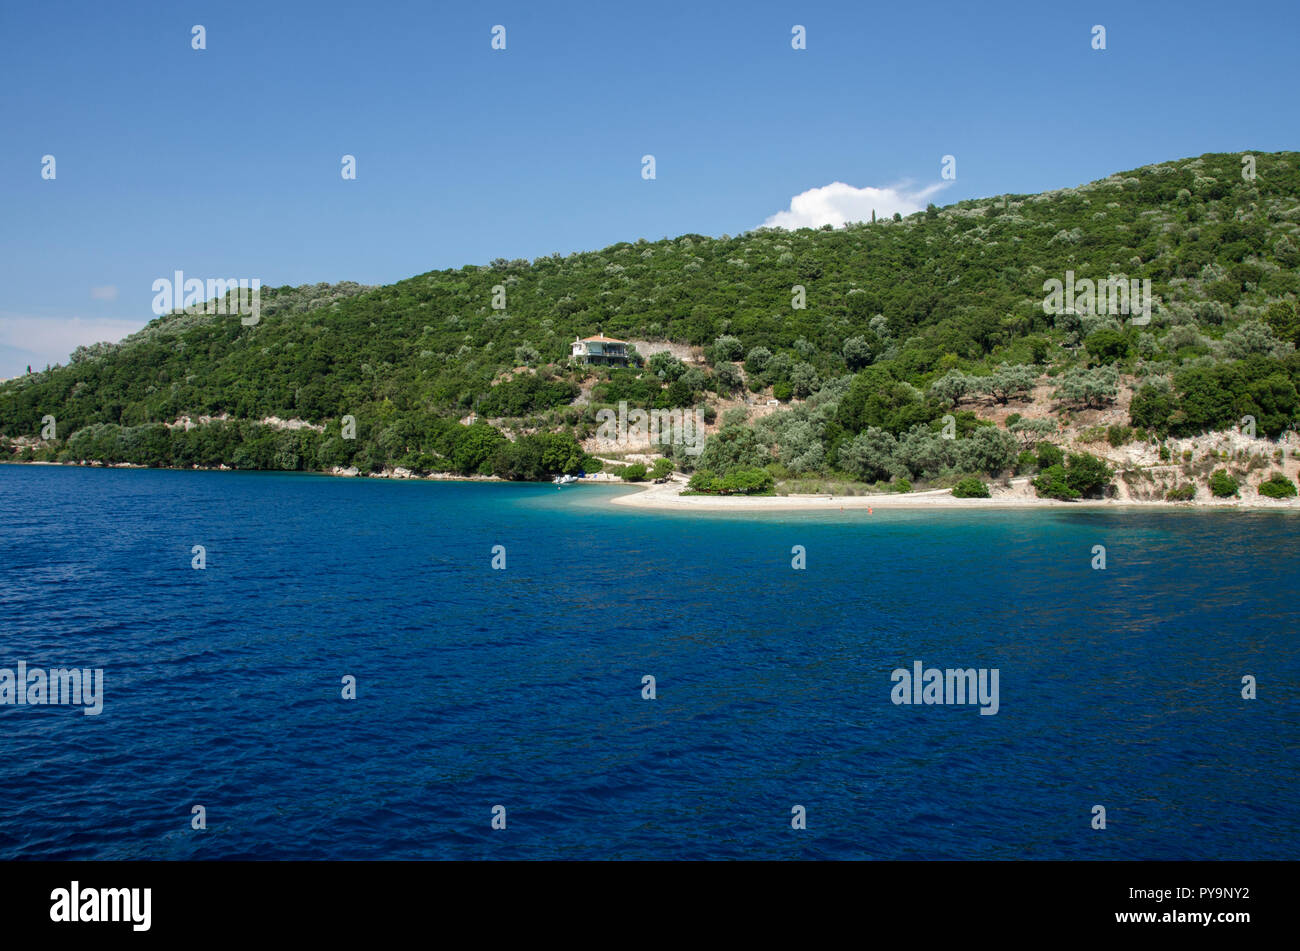 Scorpios island -property of the Onassis family – Ionian sea, Lefkada Island, Greece -  Mediterranean Stock Photo